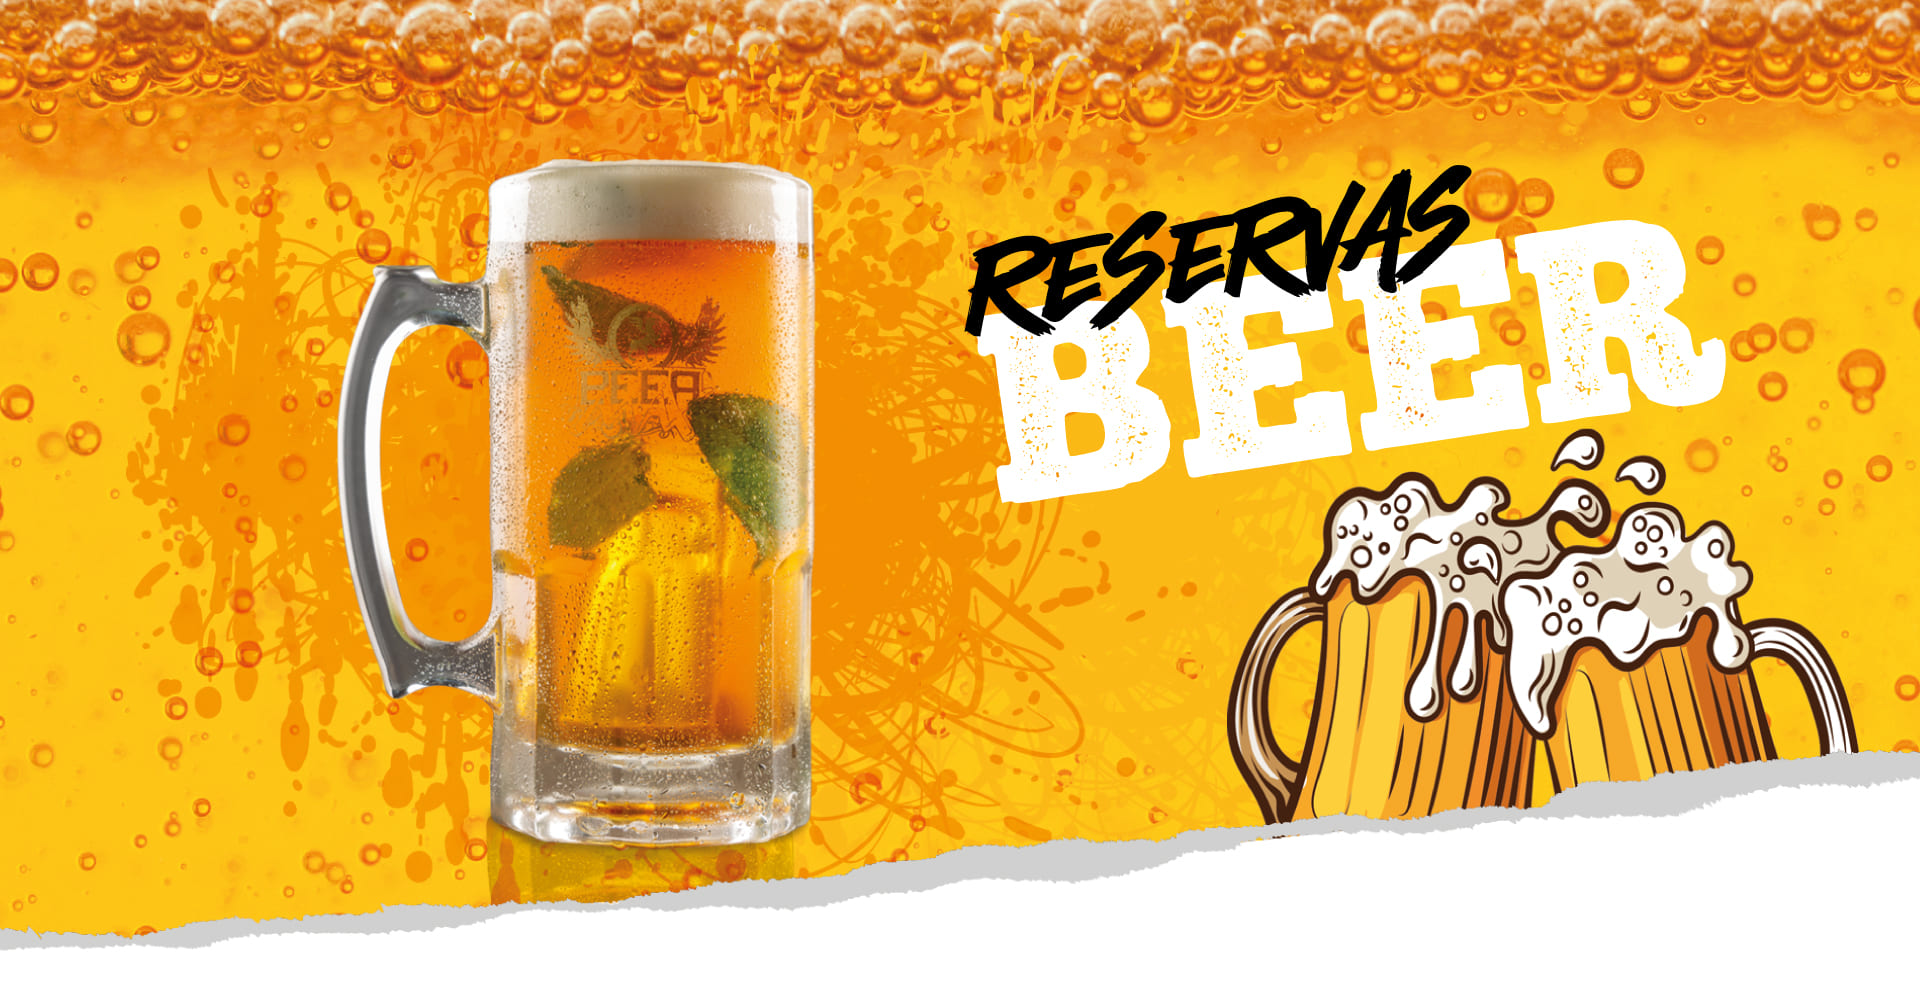 Reservas beer Pub